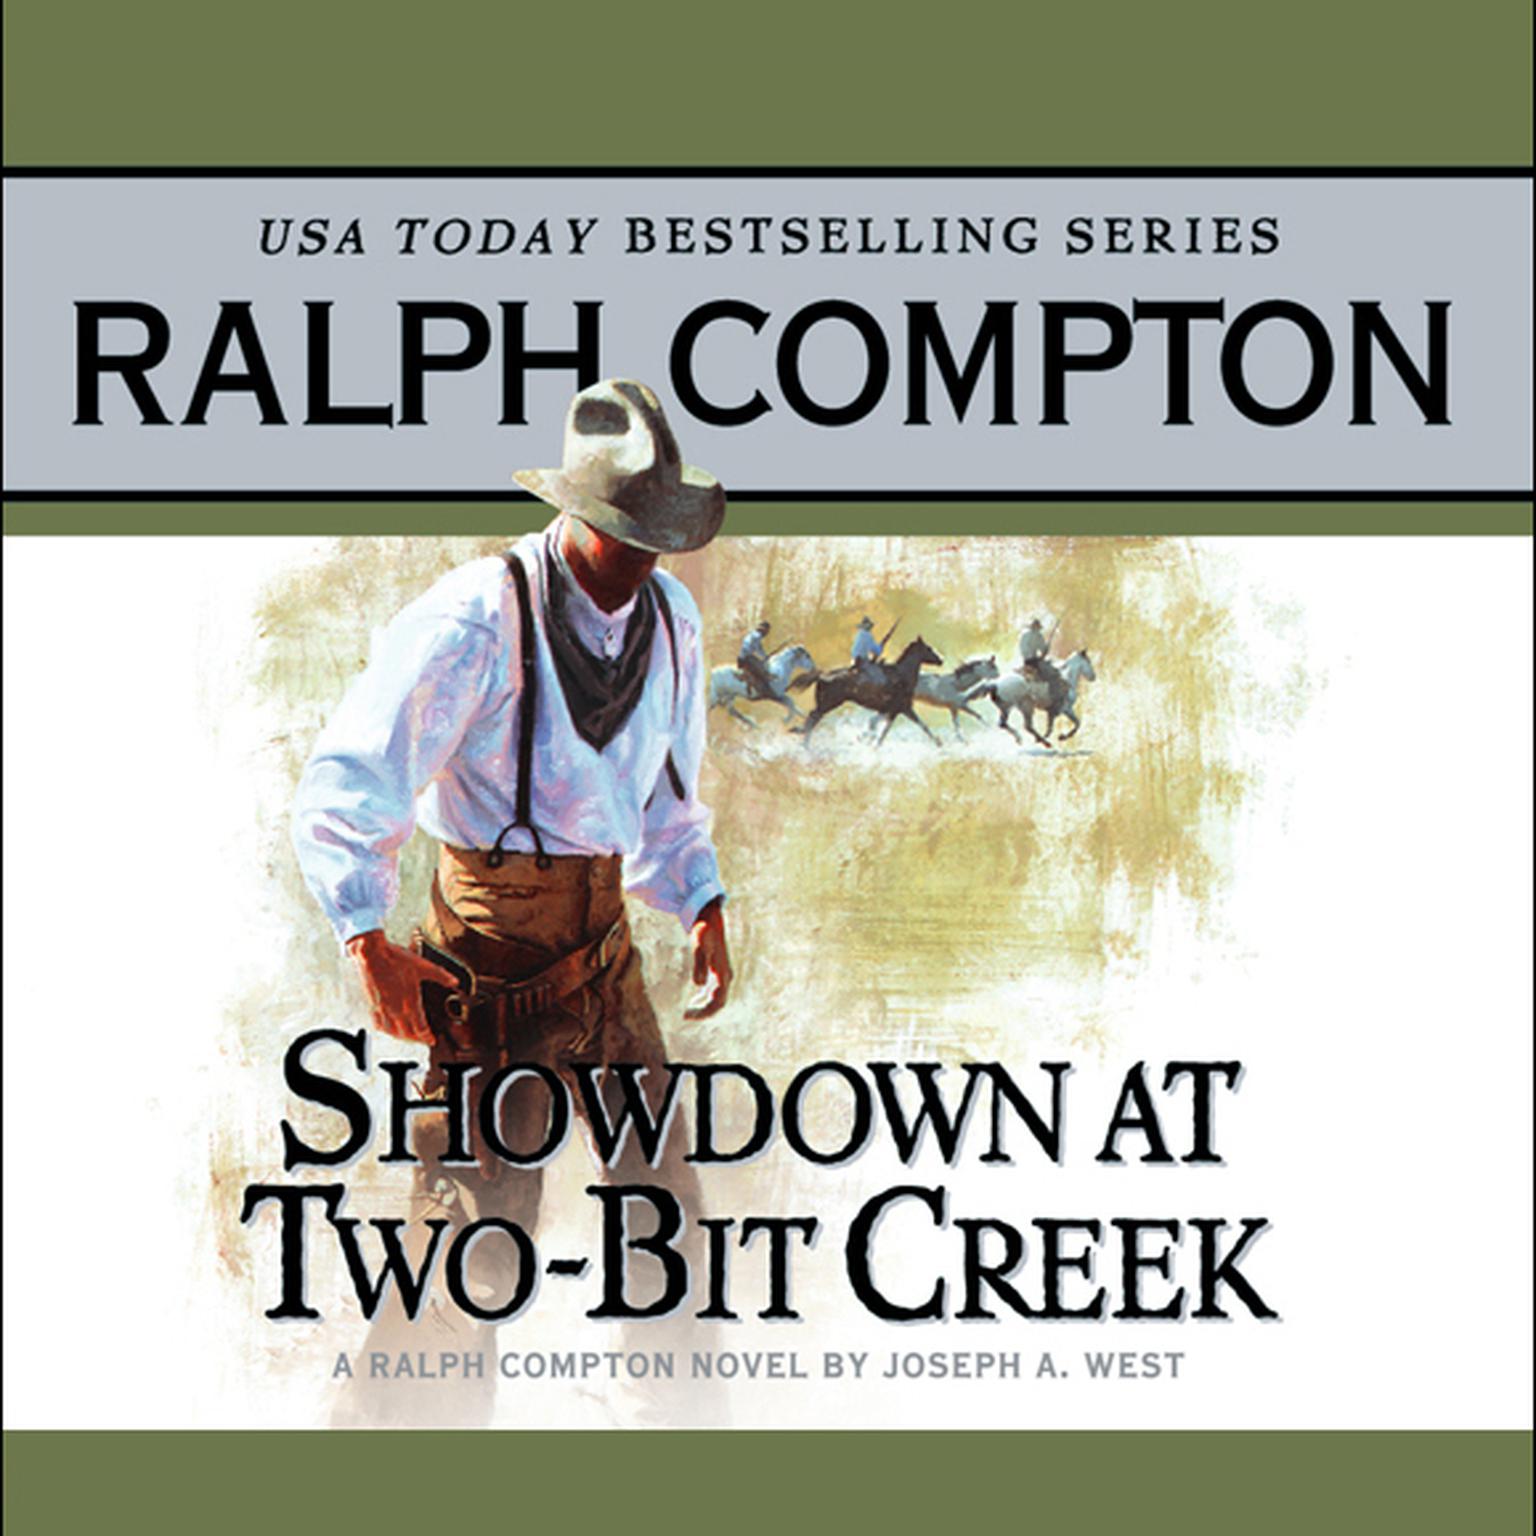 Showdown at Two Bit Creek (Abridged): A Ralph Compton Novel by Joseph A. West Audiobook, by Ralph Compton